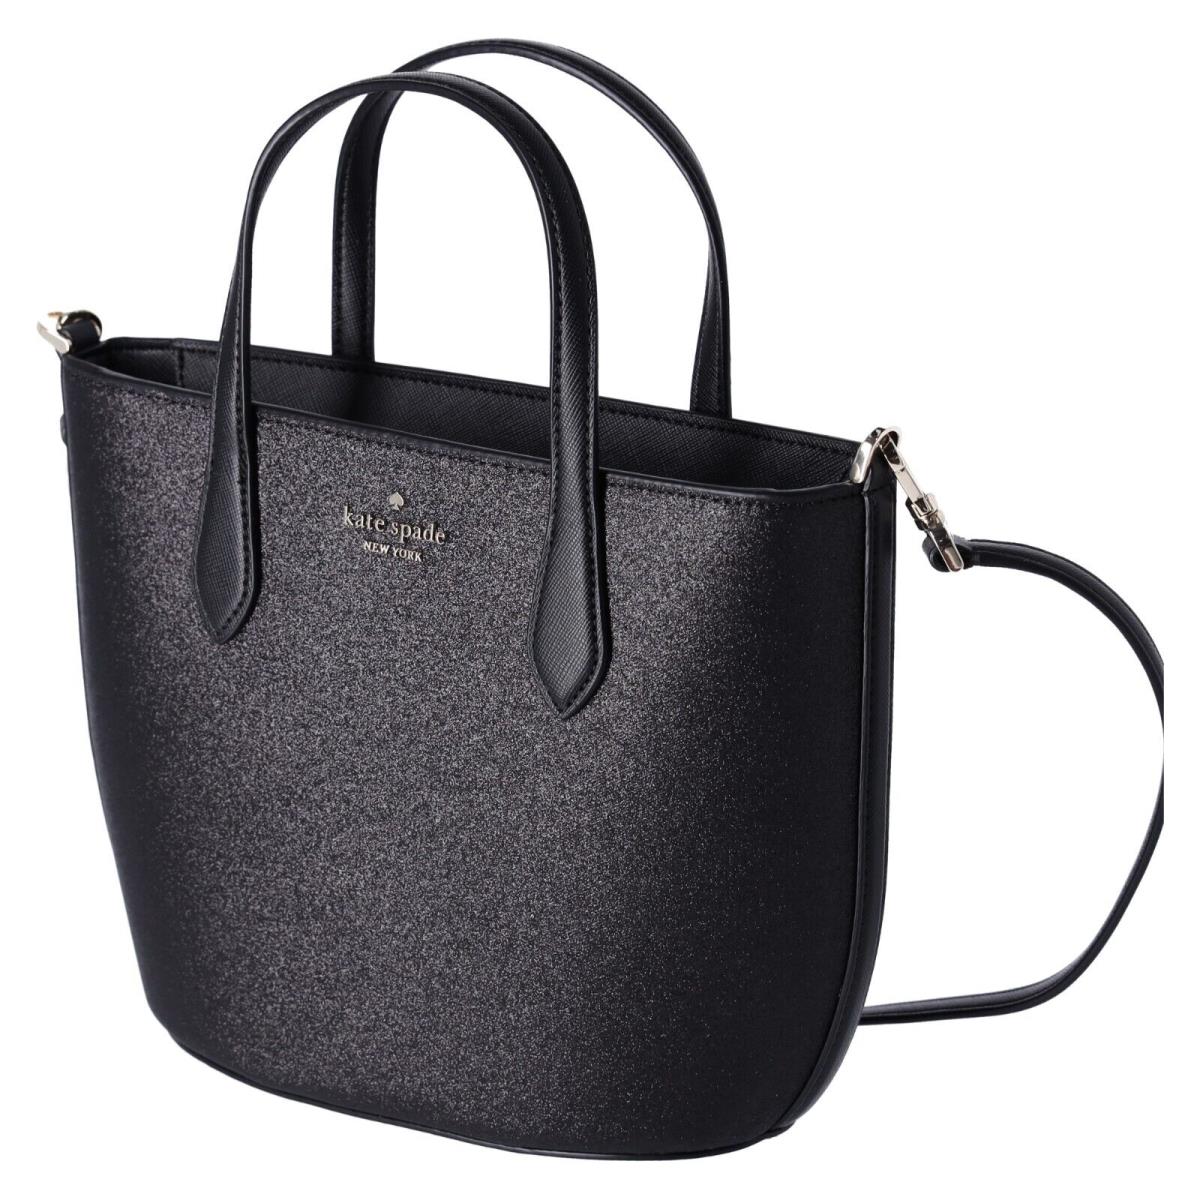 new Kate Spade purse - Women's handbags